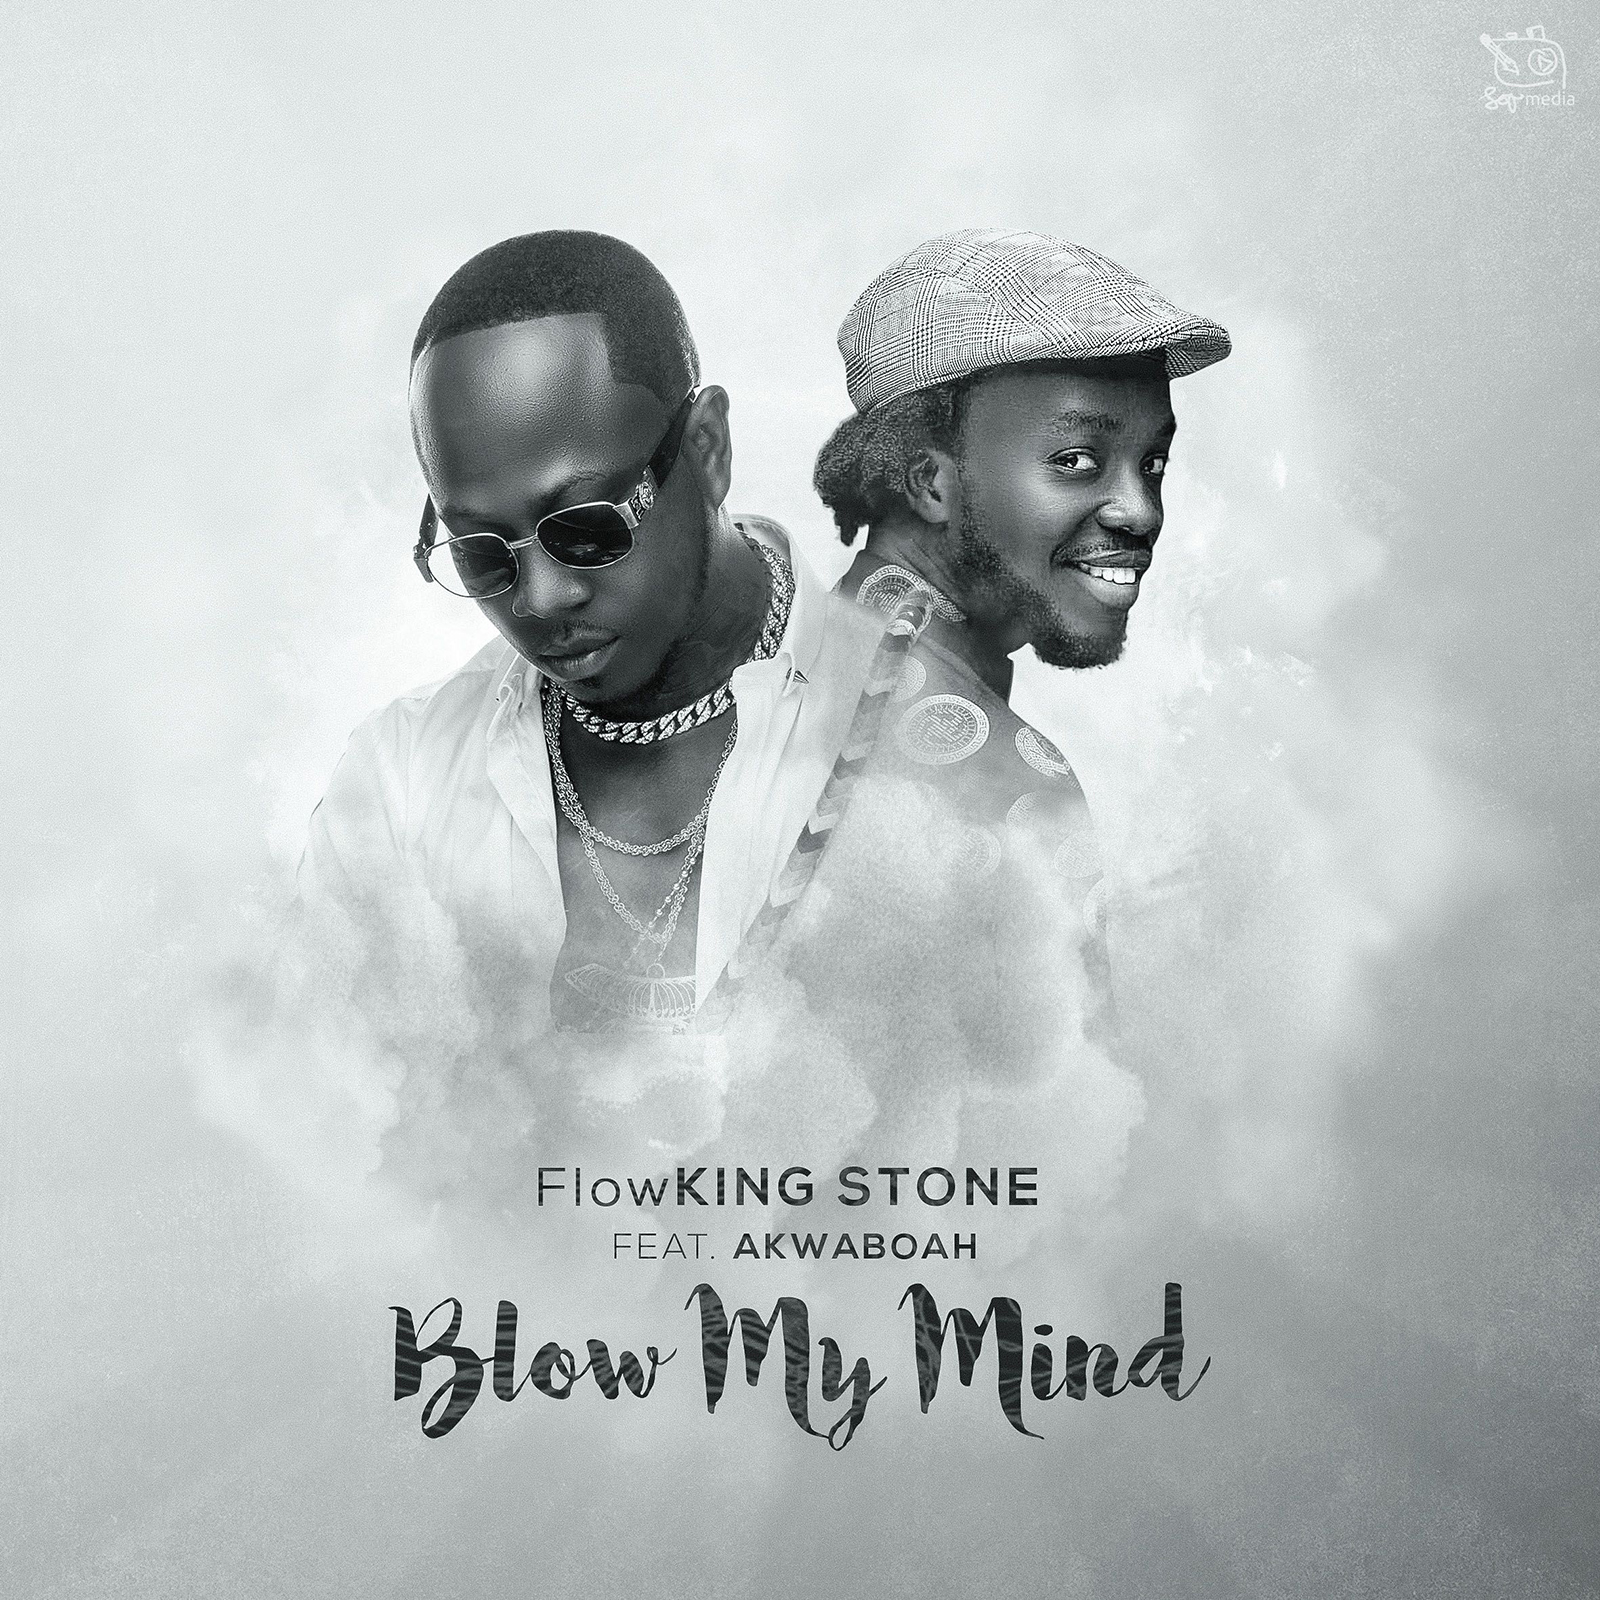 Blow My Mind by Flowking Stone feat. Akwaboah